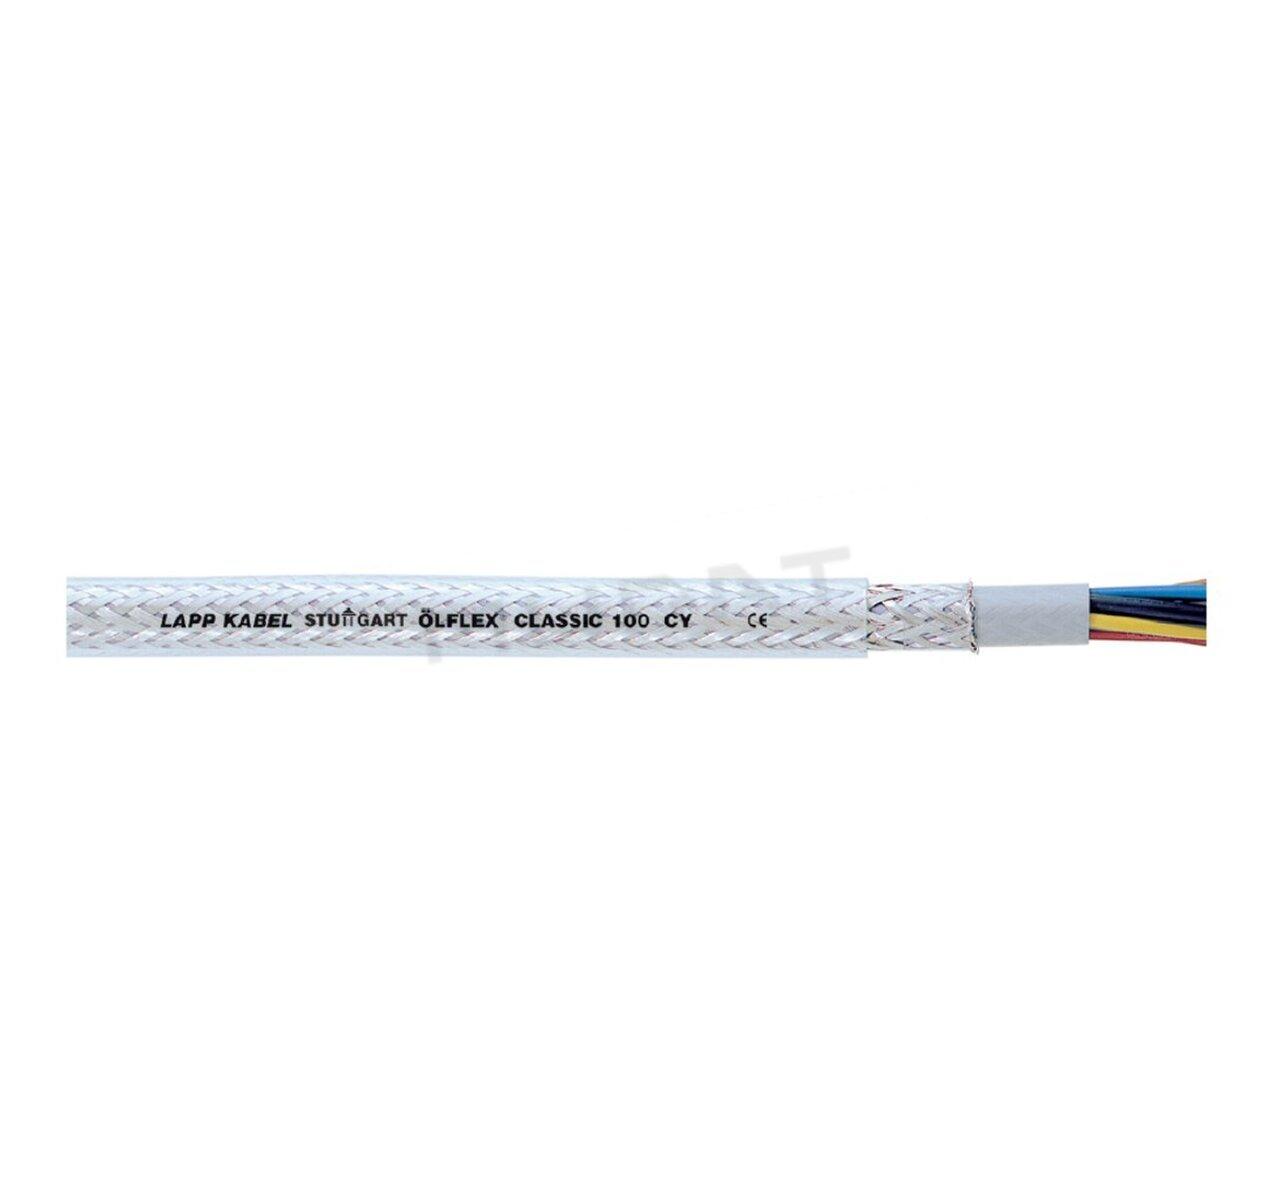 Kábel OLFLEX CLASSIC 100 CY 7Gx2,5 mm2